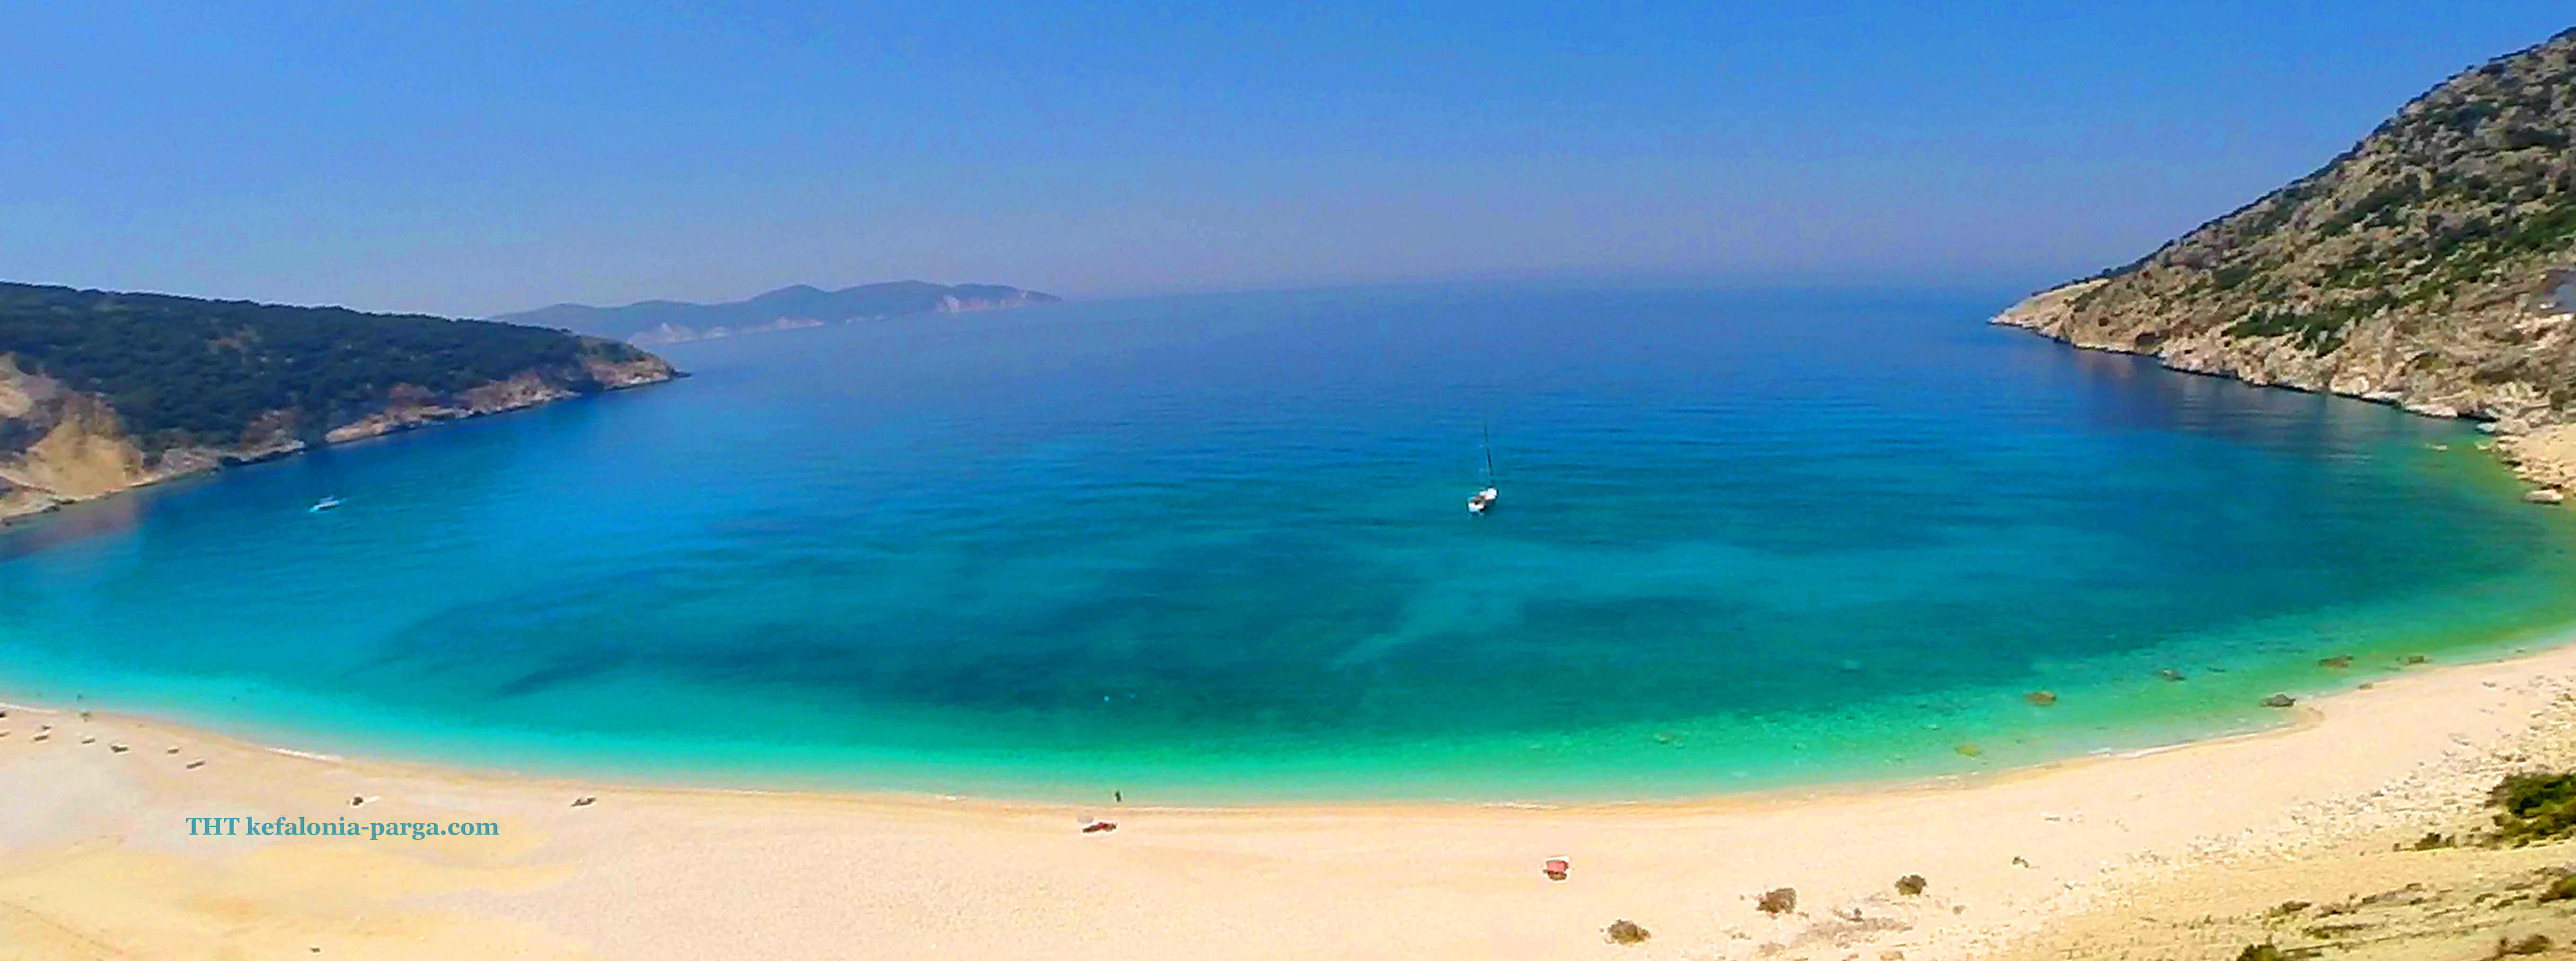 Kefalonia beaches: Myrtos beach. Greece vacations.